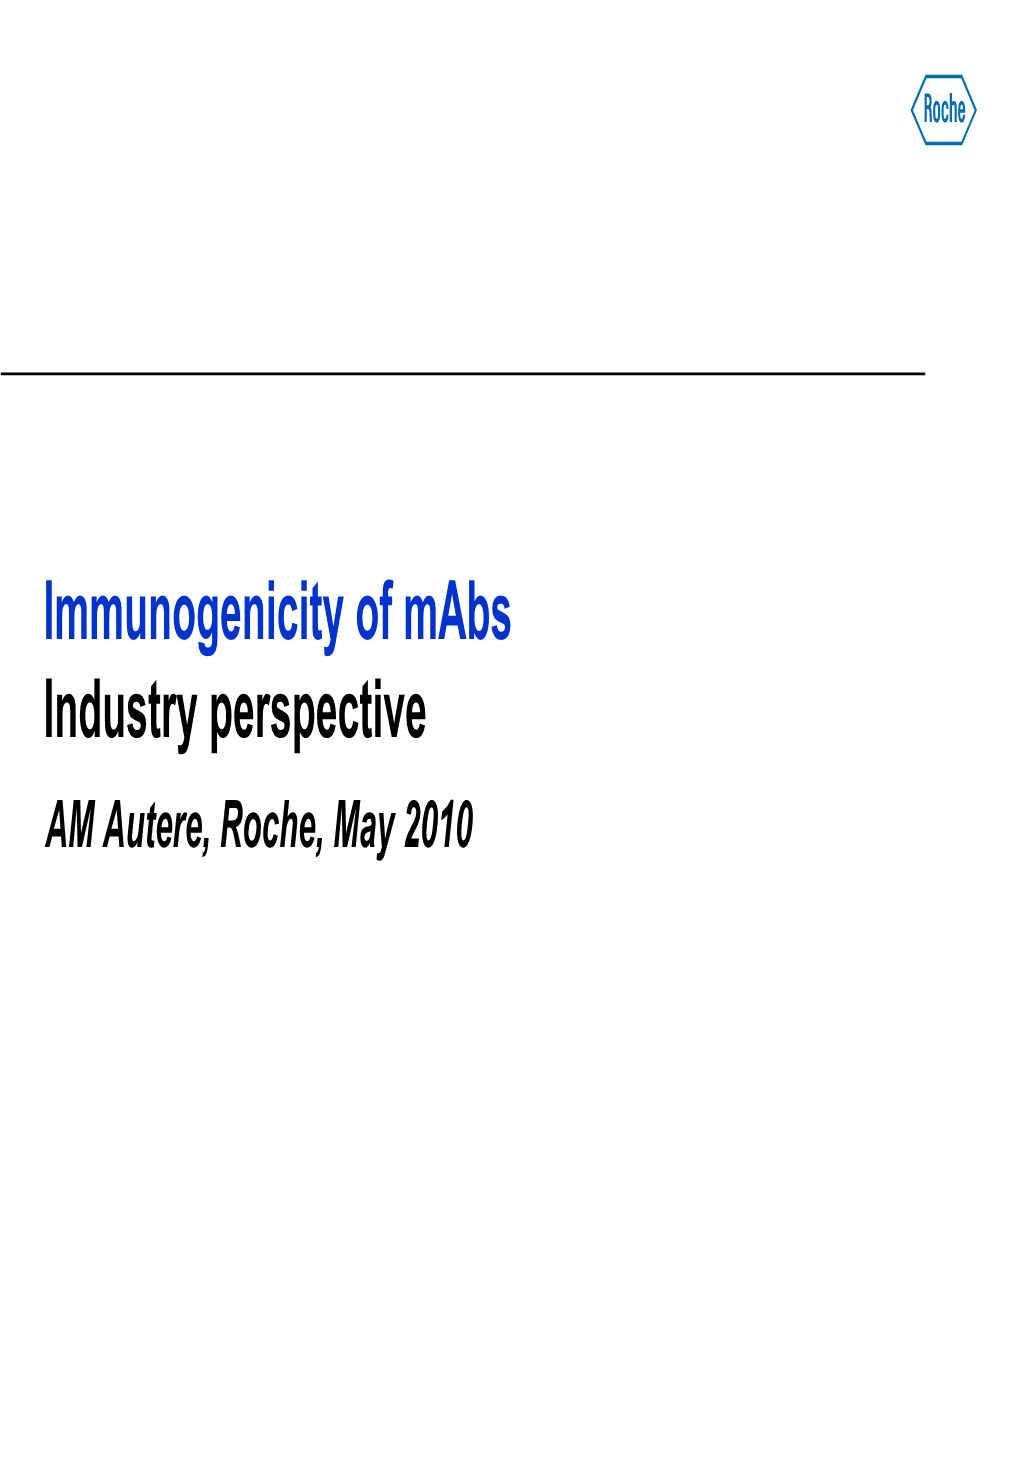 Immunogenicity of Mabs